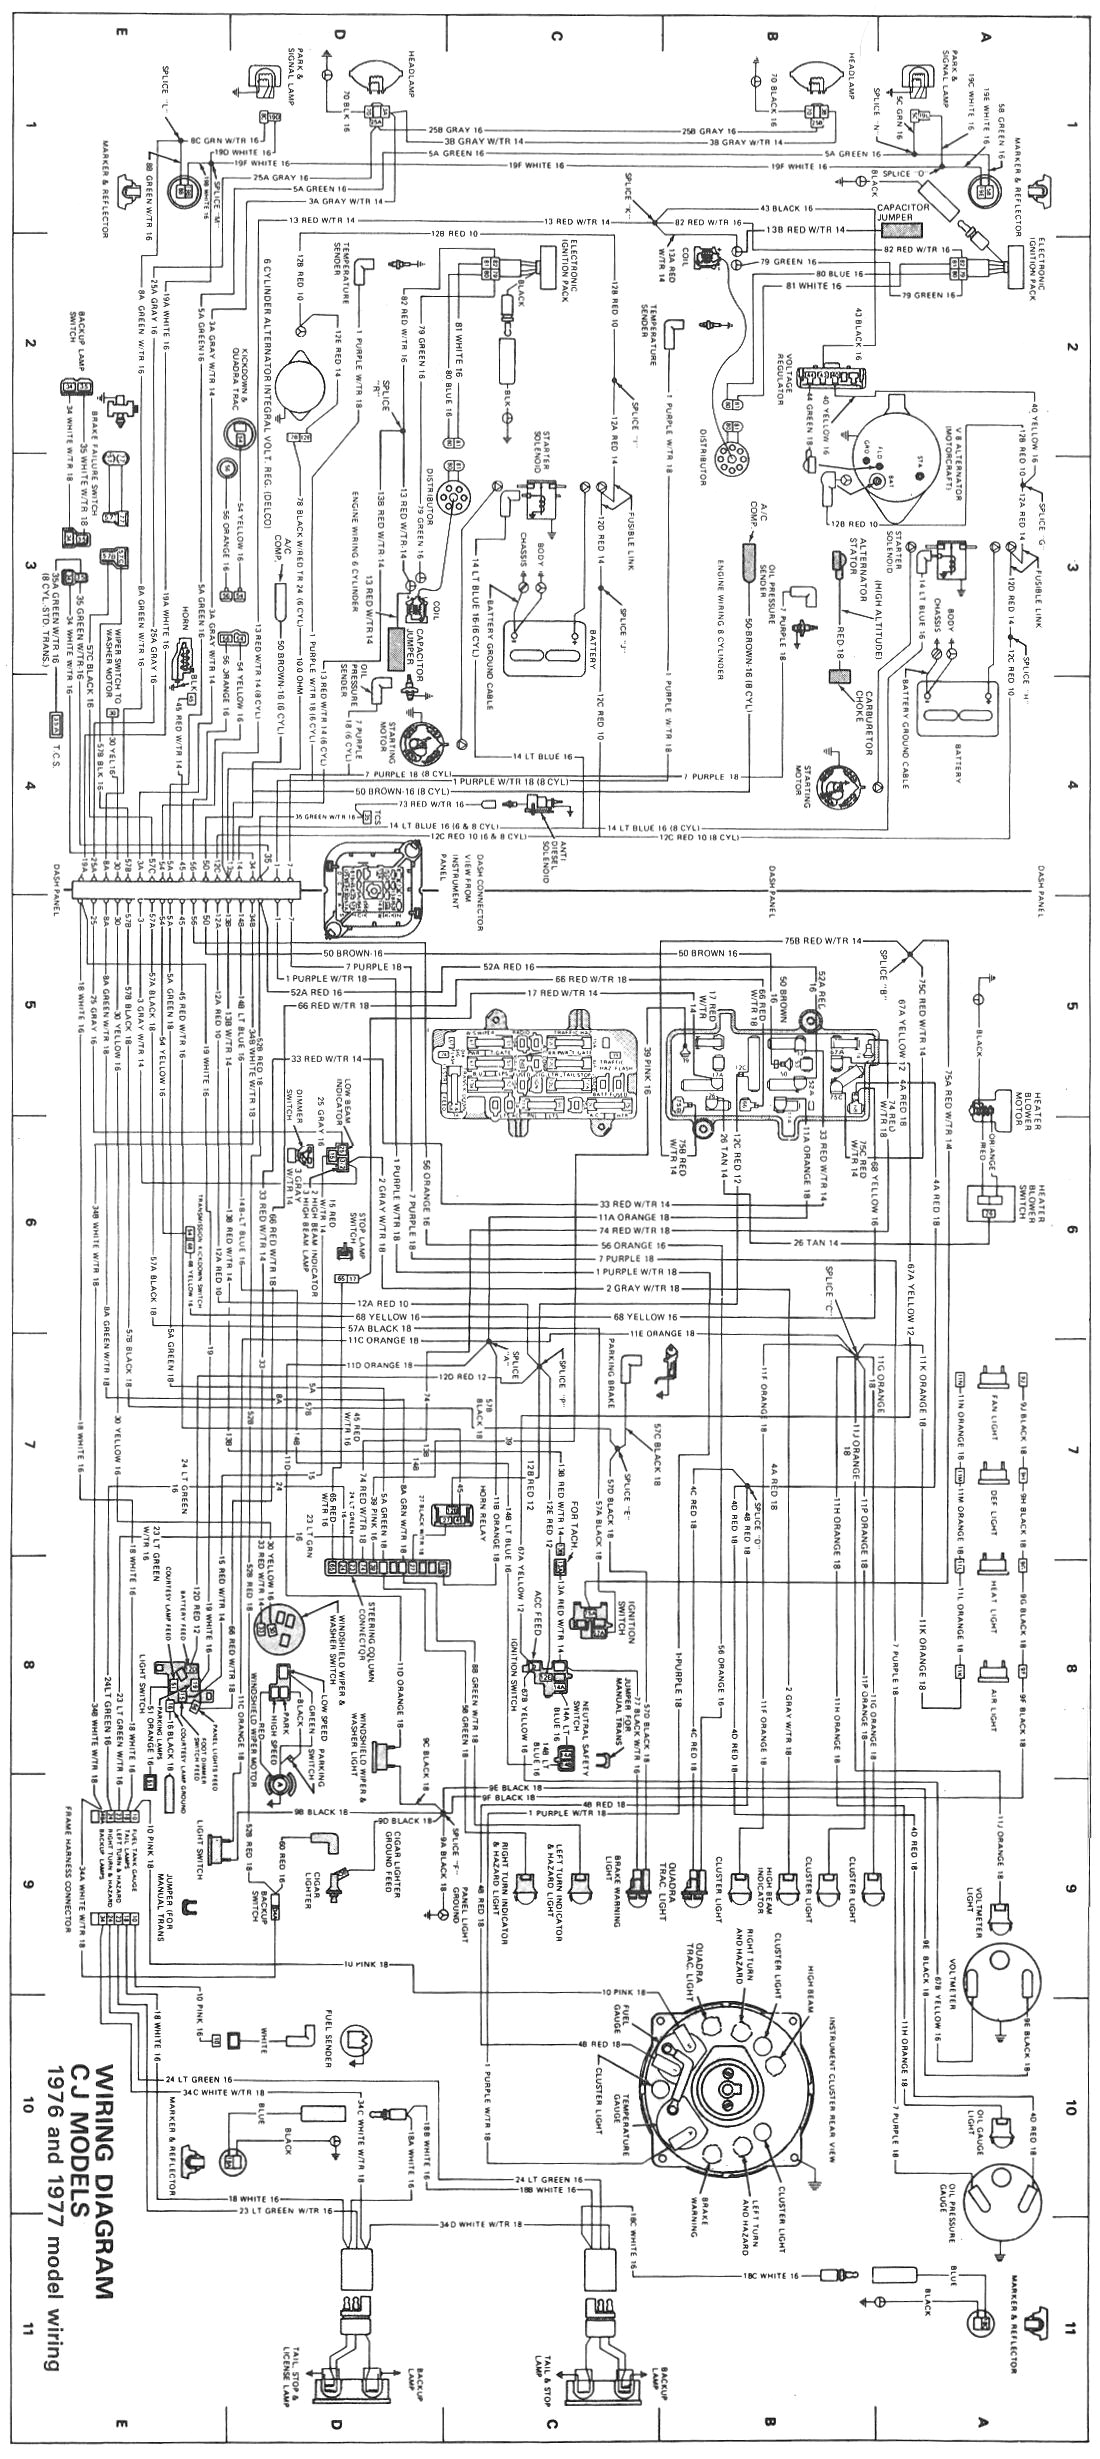 jeep cj5 wiring diagram pdf lovely repair guides wiring diagrams